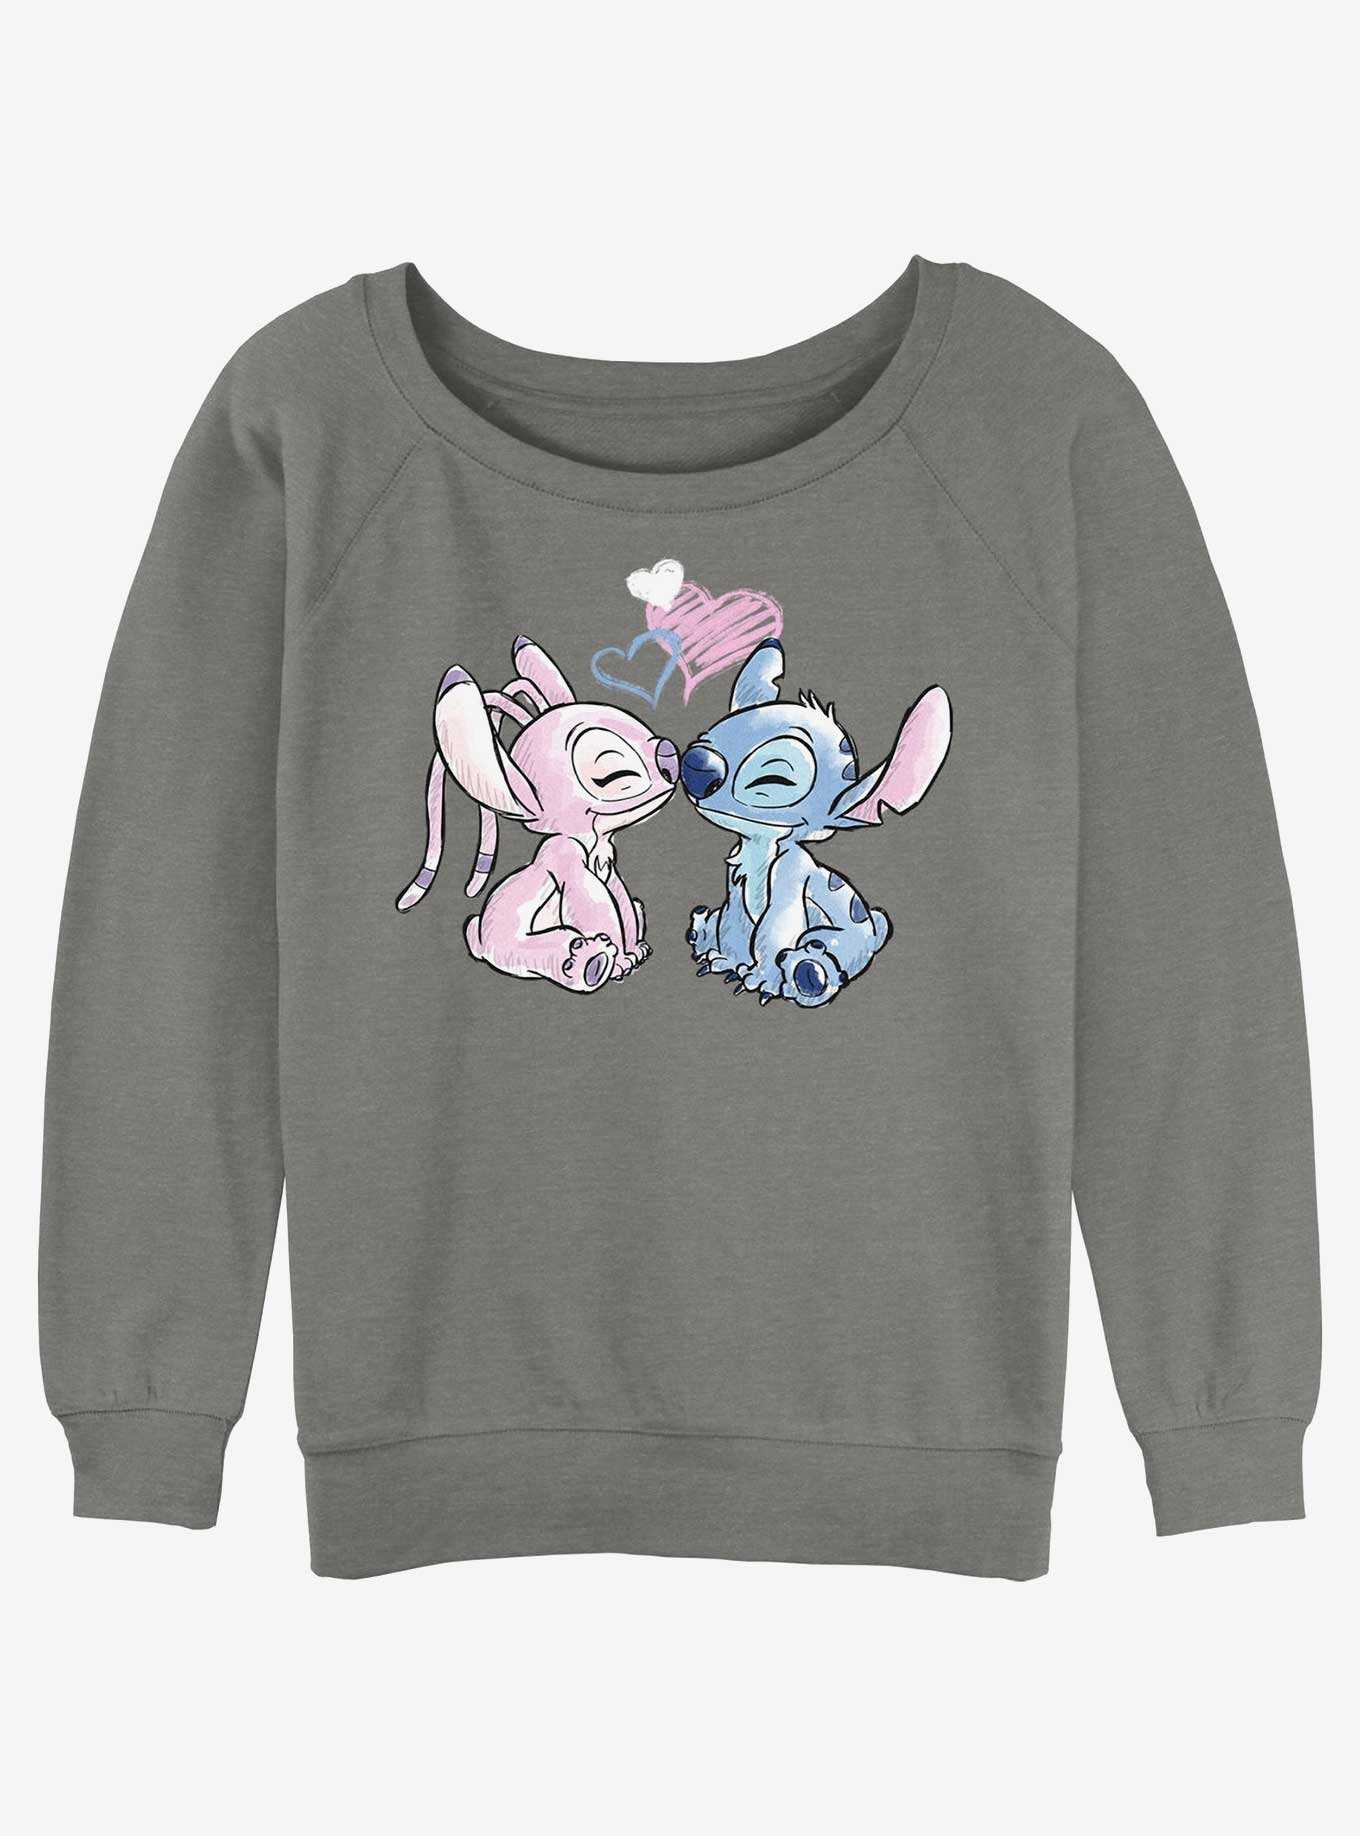 OFFICIAL Lilo & Stitch T-Shirts & Merchandise